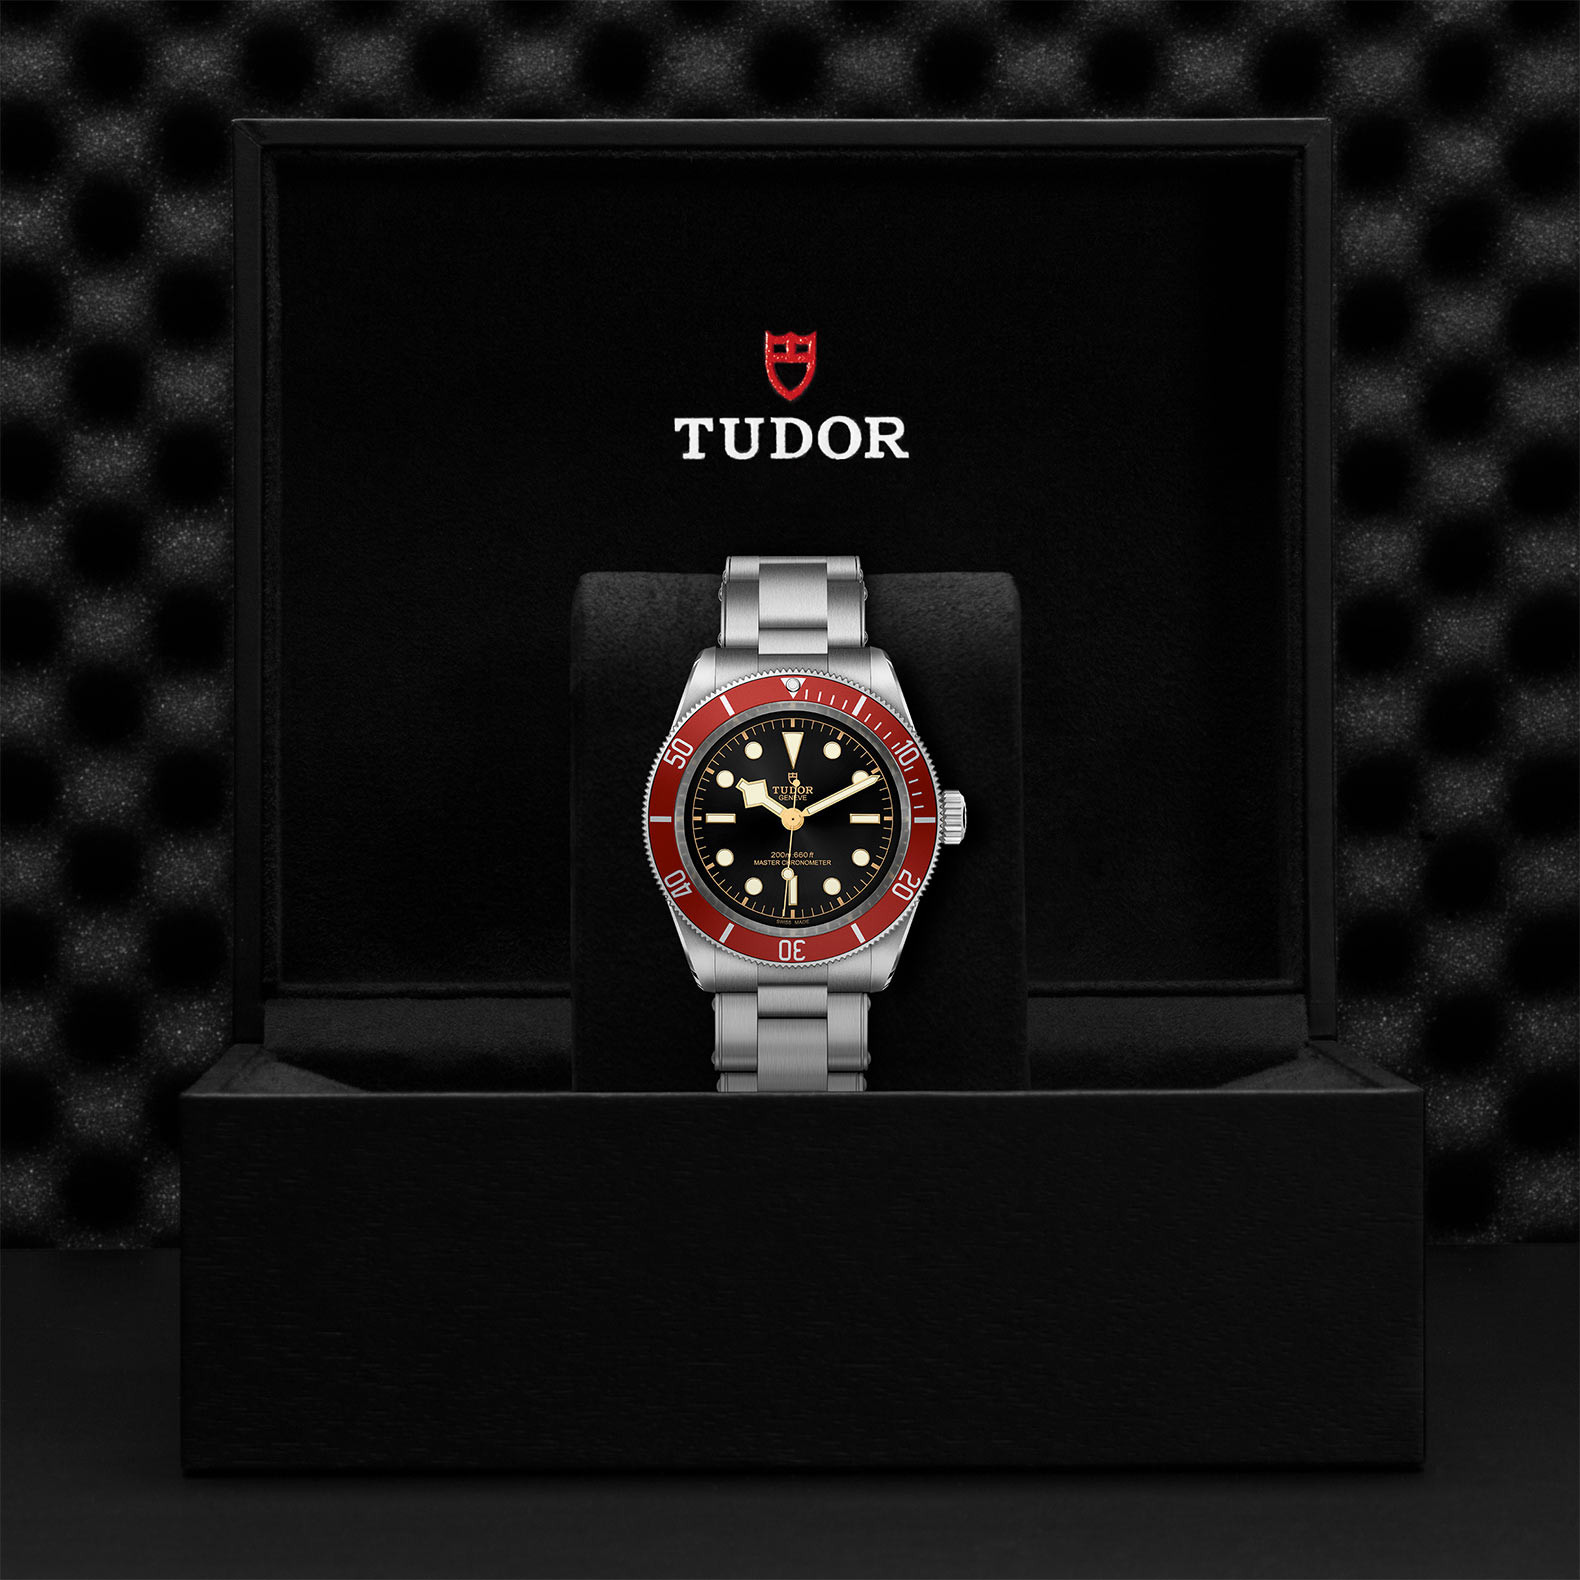 TUDOR Black Bay with 41mm Steel Case and Steel Bracelet M7941A1A0RU-0001 Watch in Presentation Box